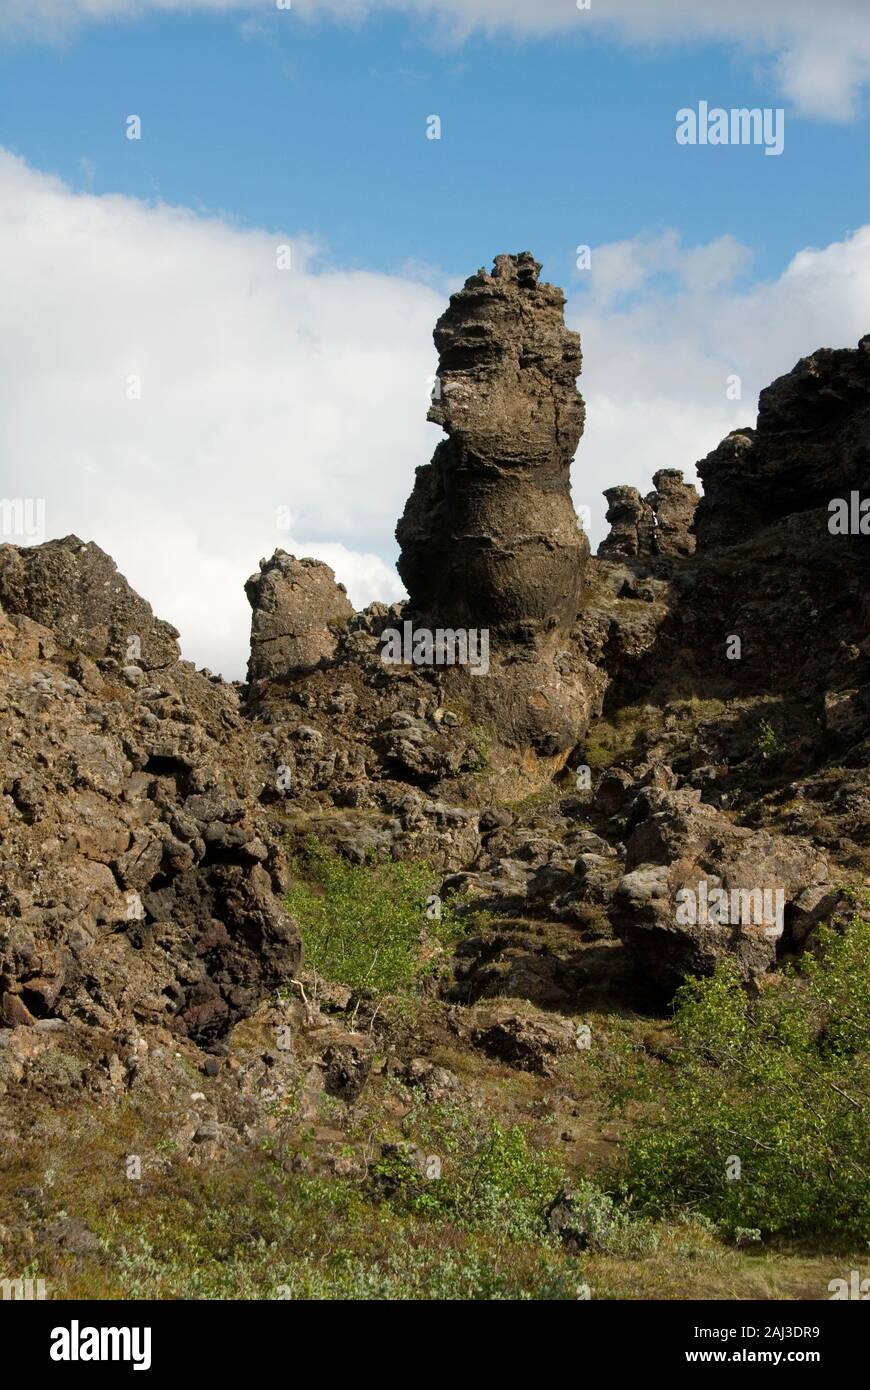 Europa, Island, Iceland, Vulkanlandschaft Dimmuborgir am Myvatn, Mueckensee, 'dunkle Burgen' Stock Photo